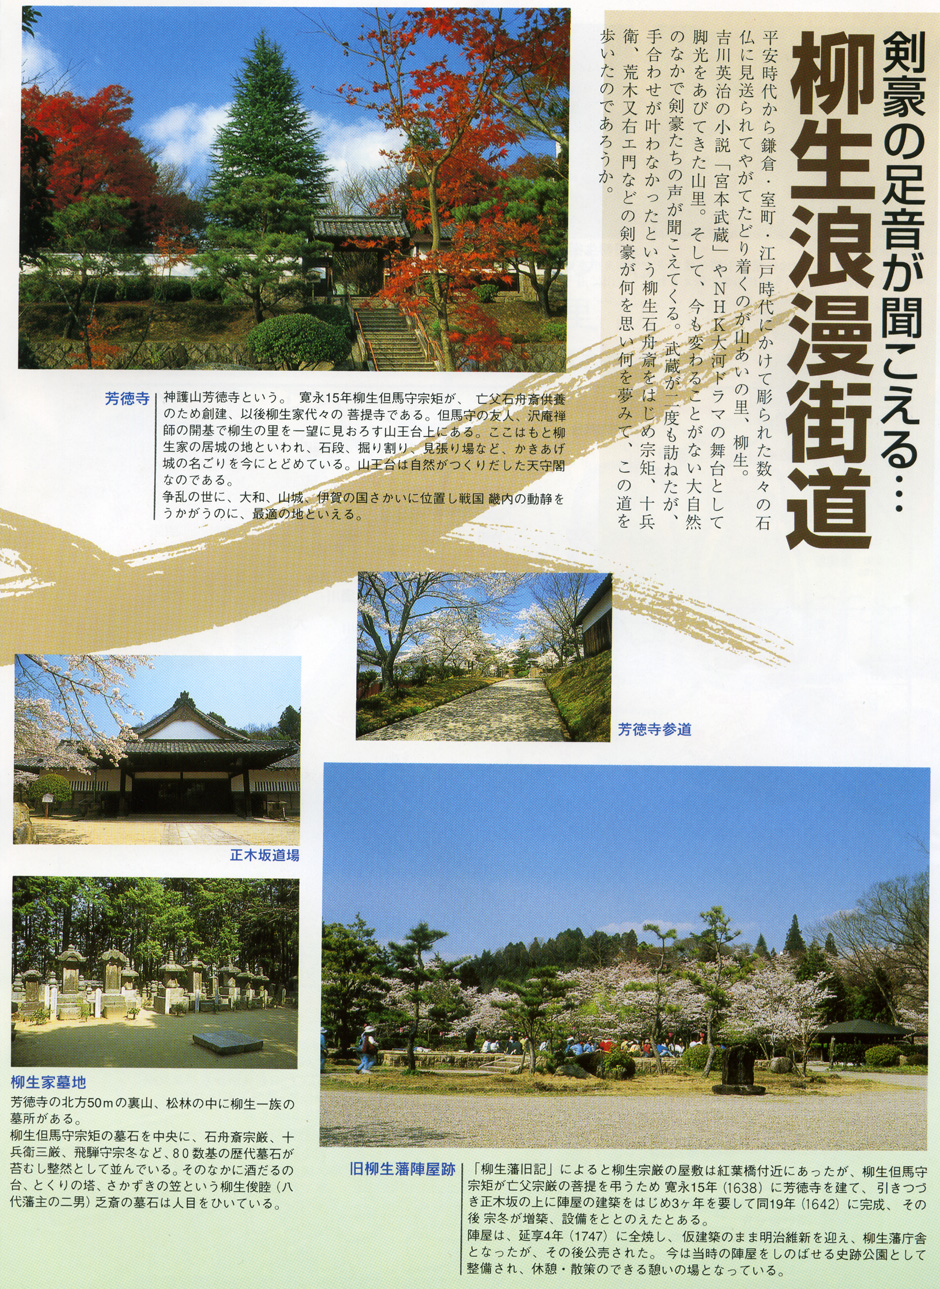 Tourist Brochures of Yagyu Village